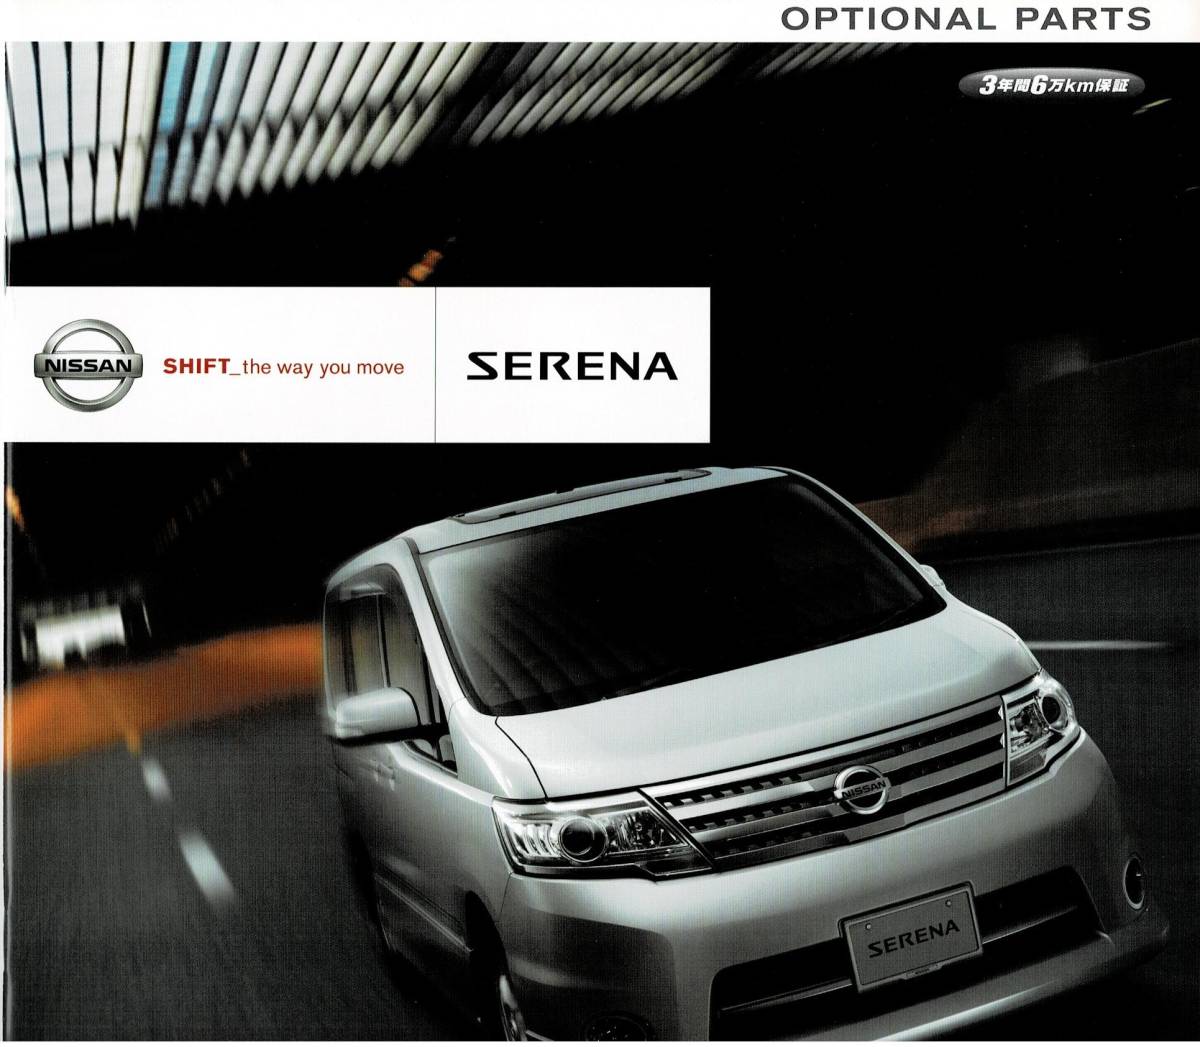  Nissan Serena каталог +OP